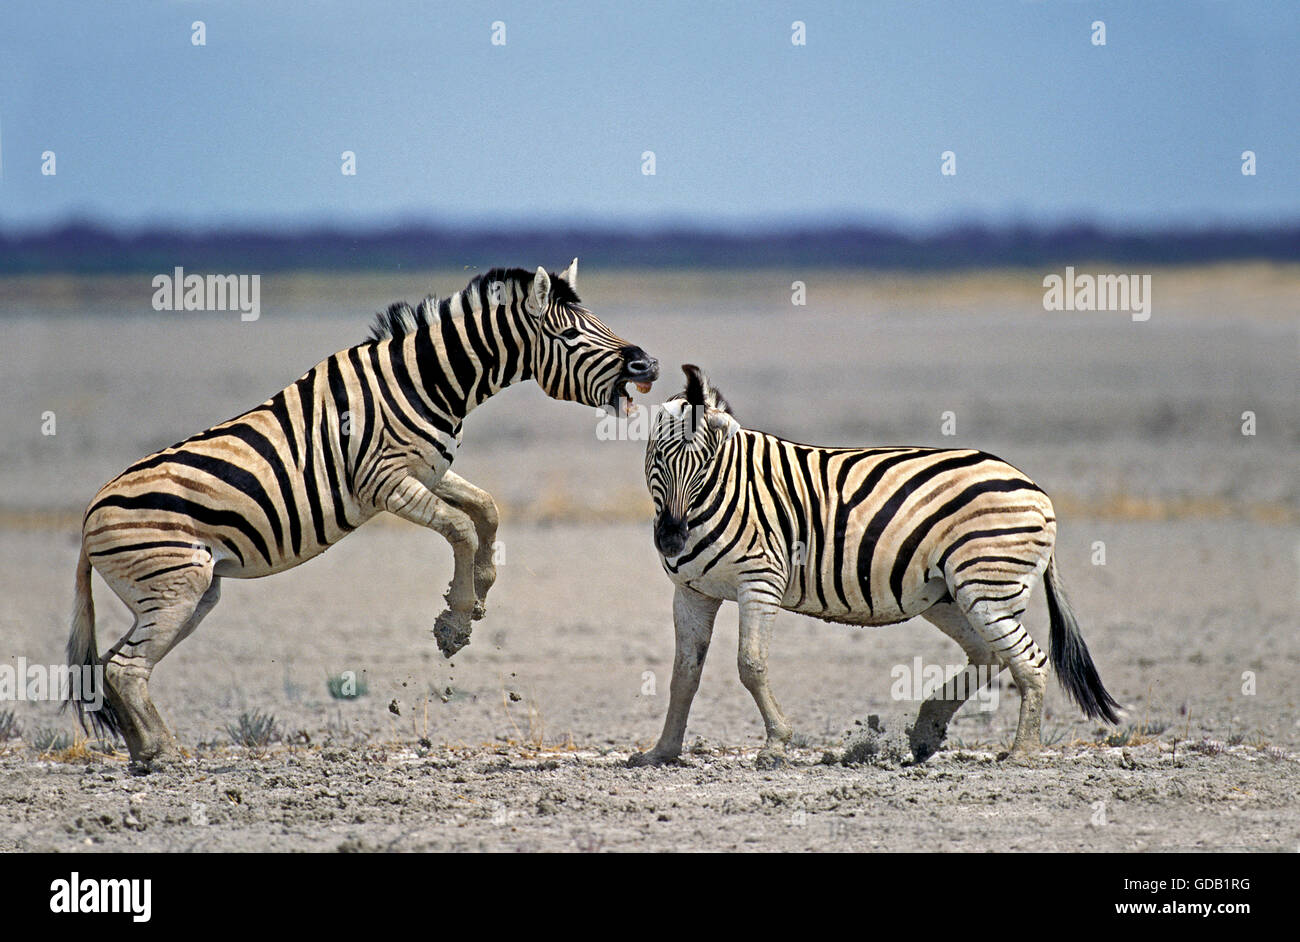 Le zèbre de Burchell, Equus burchelli, Etalons combats, parc Serengeti en Tanzanie Banque D'Images